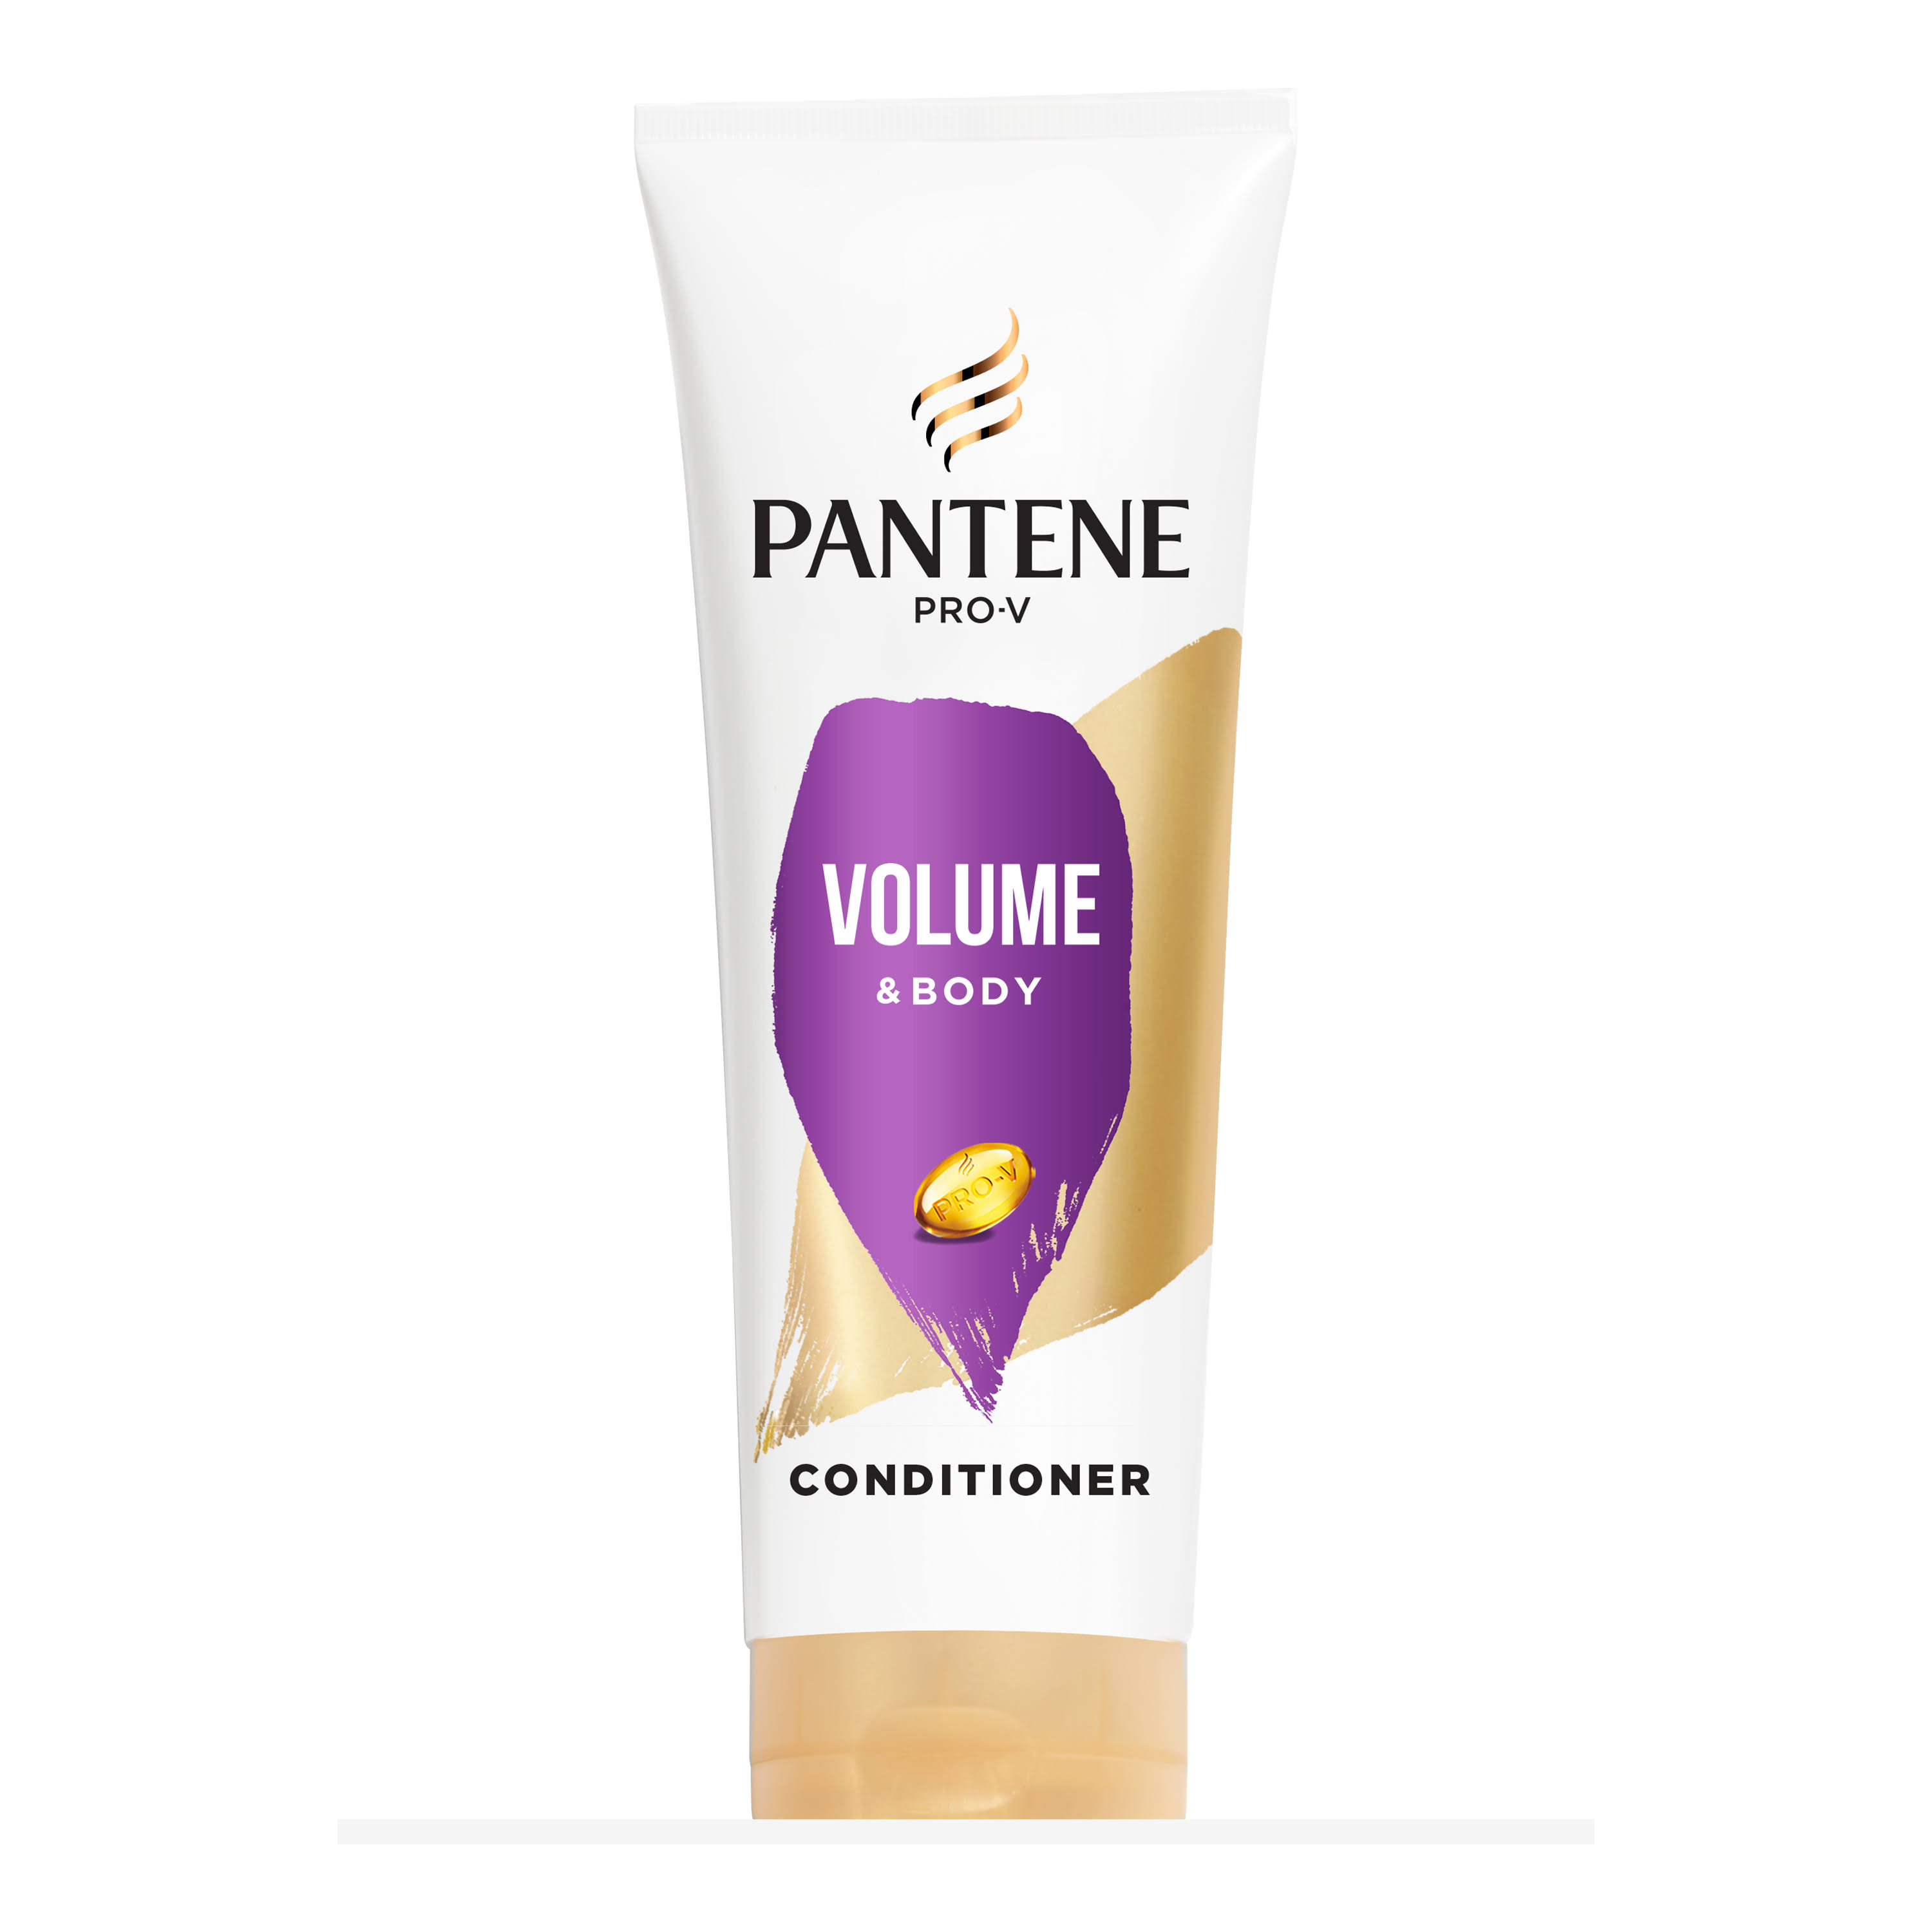 Pantene Pro-V Sheer Volume Conditioner, 10.4 oz